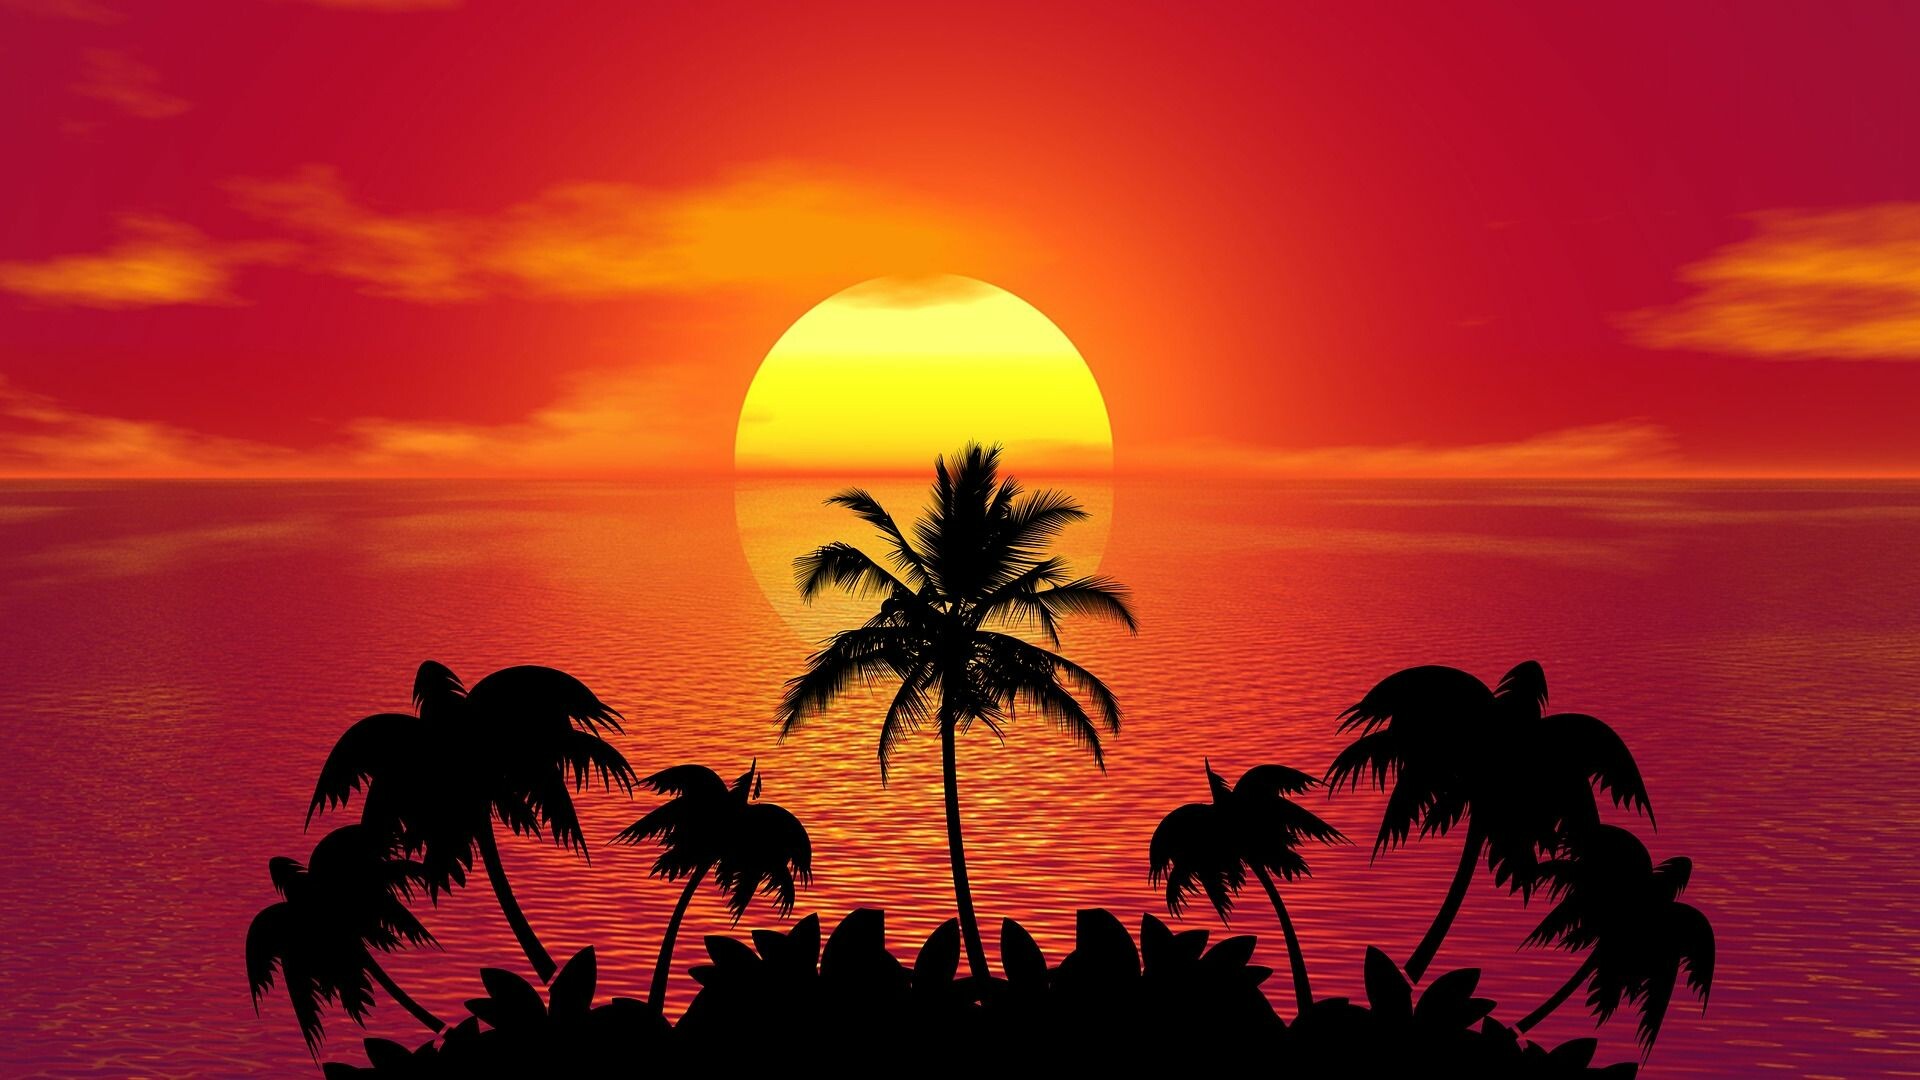 Sunset: Solar disk crossing the horizon, Tropical twilight. 1920x1080 Full HD Wallpaper.